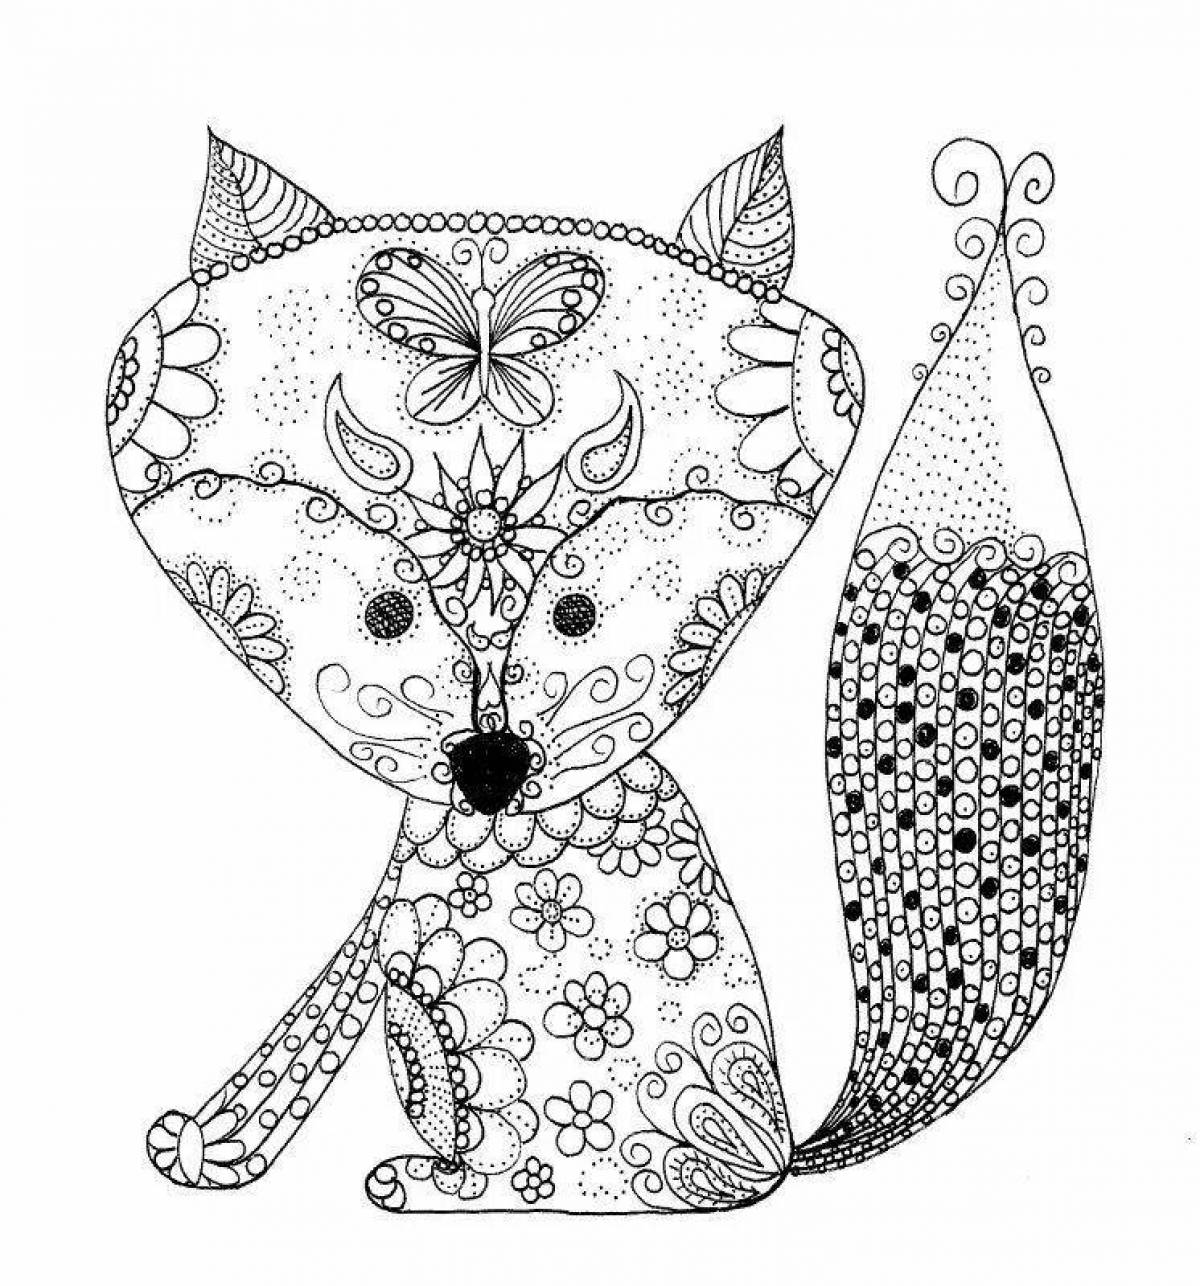 Alluring fox anti-stress coloring book